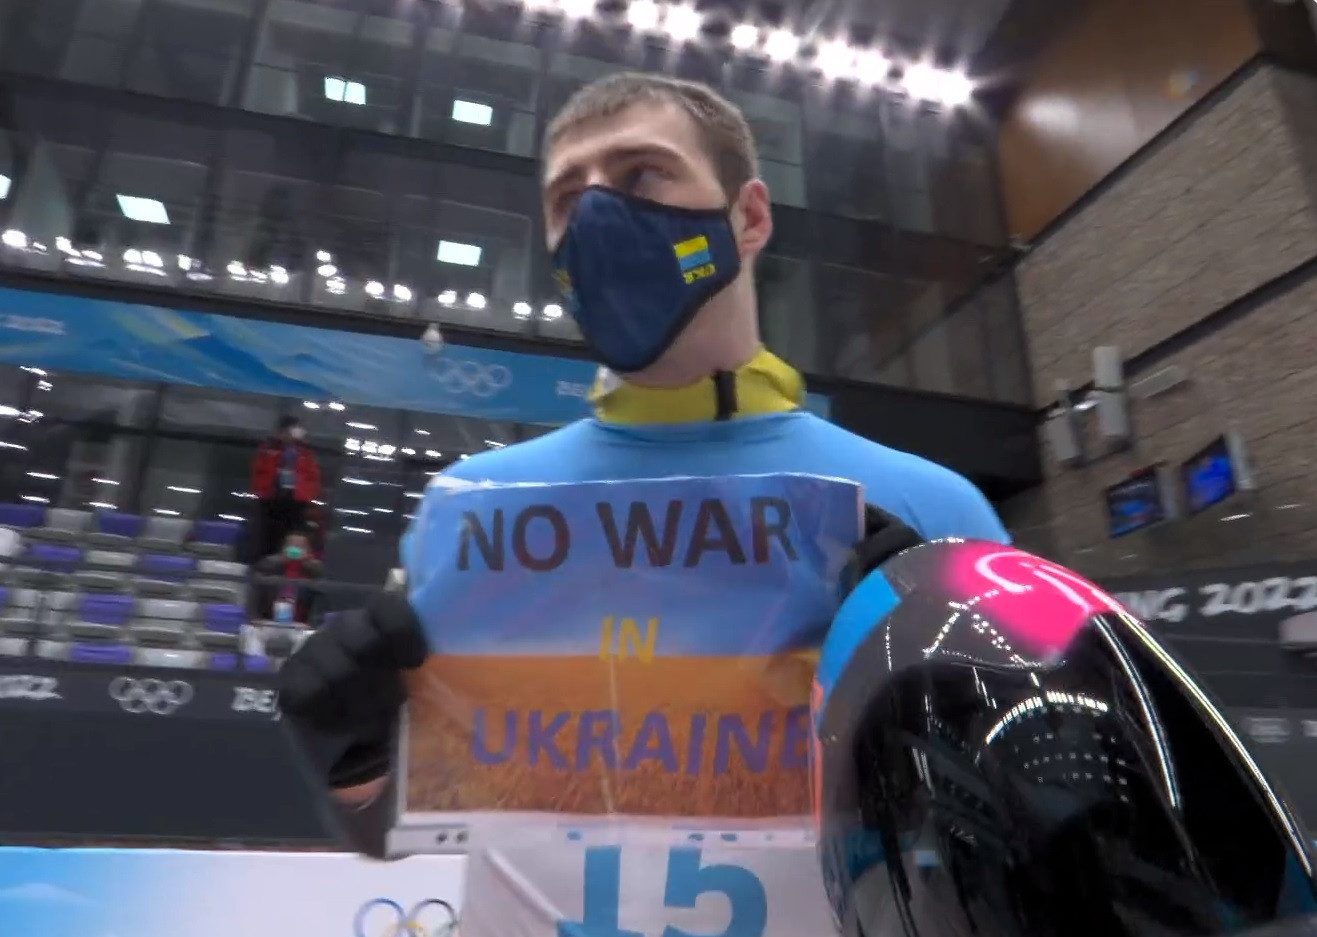 Ukrainian skeleton racer Heraskevych wants complete Russia ban from sport after Beijing 2022 protest